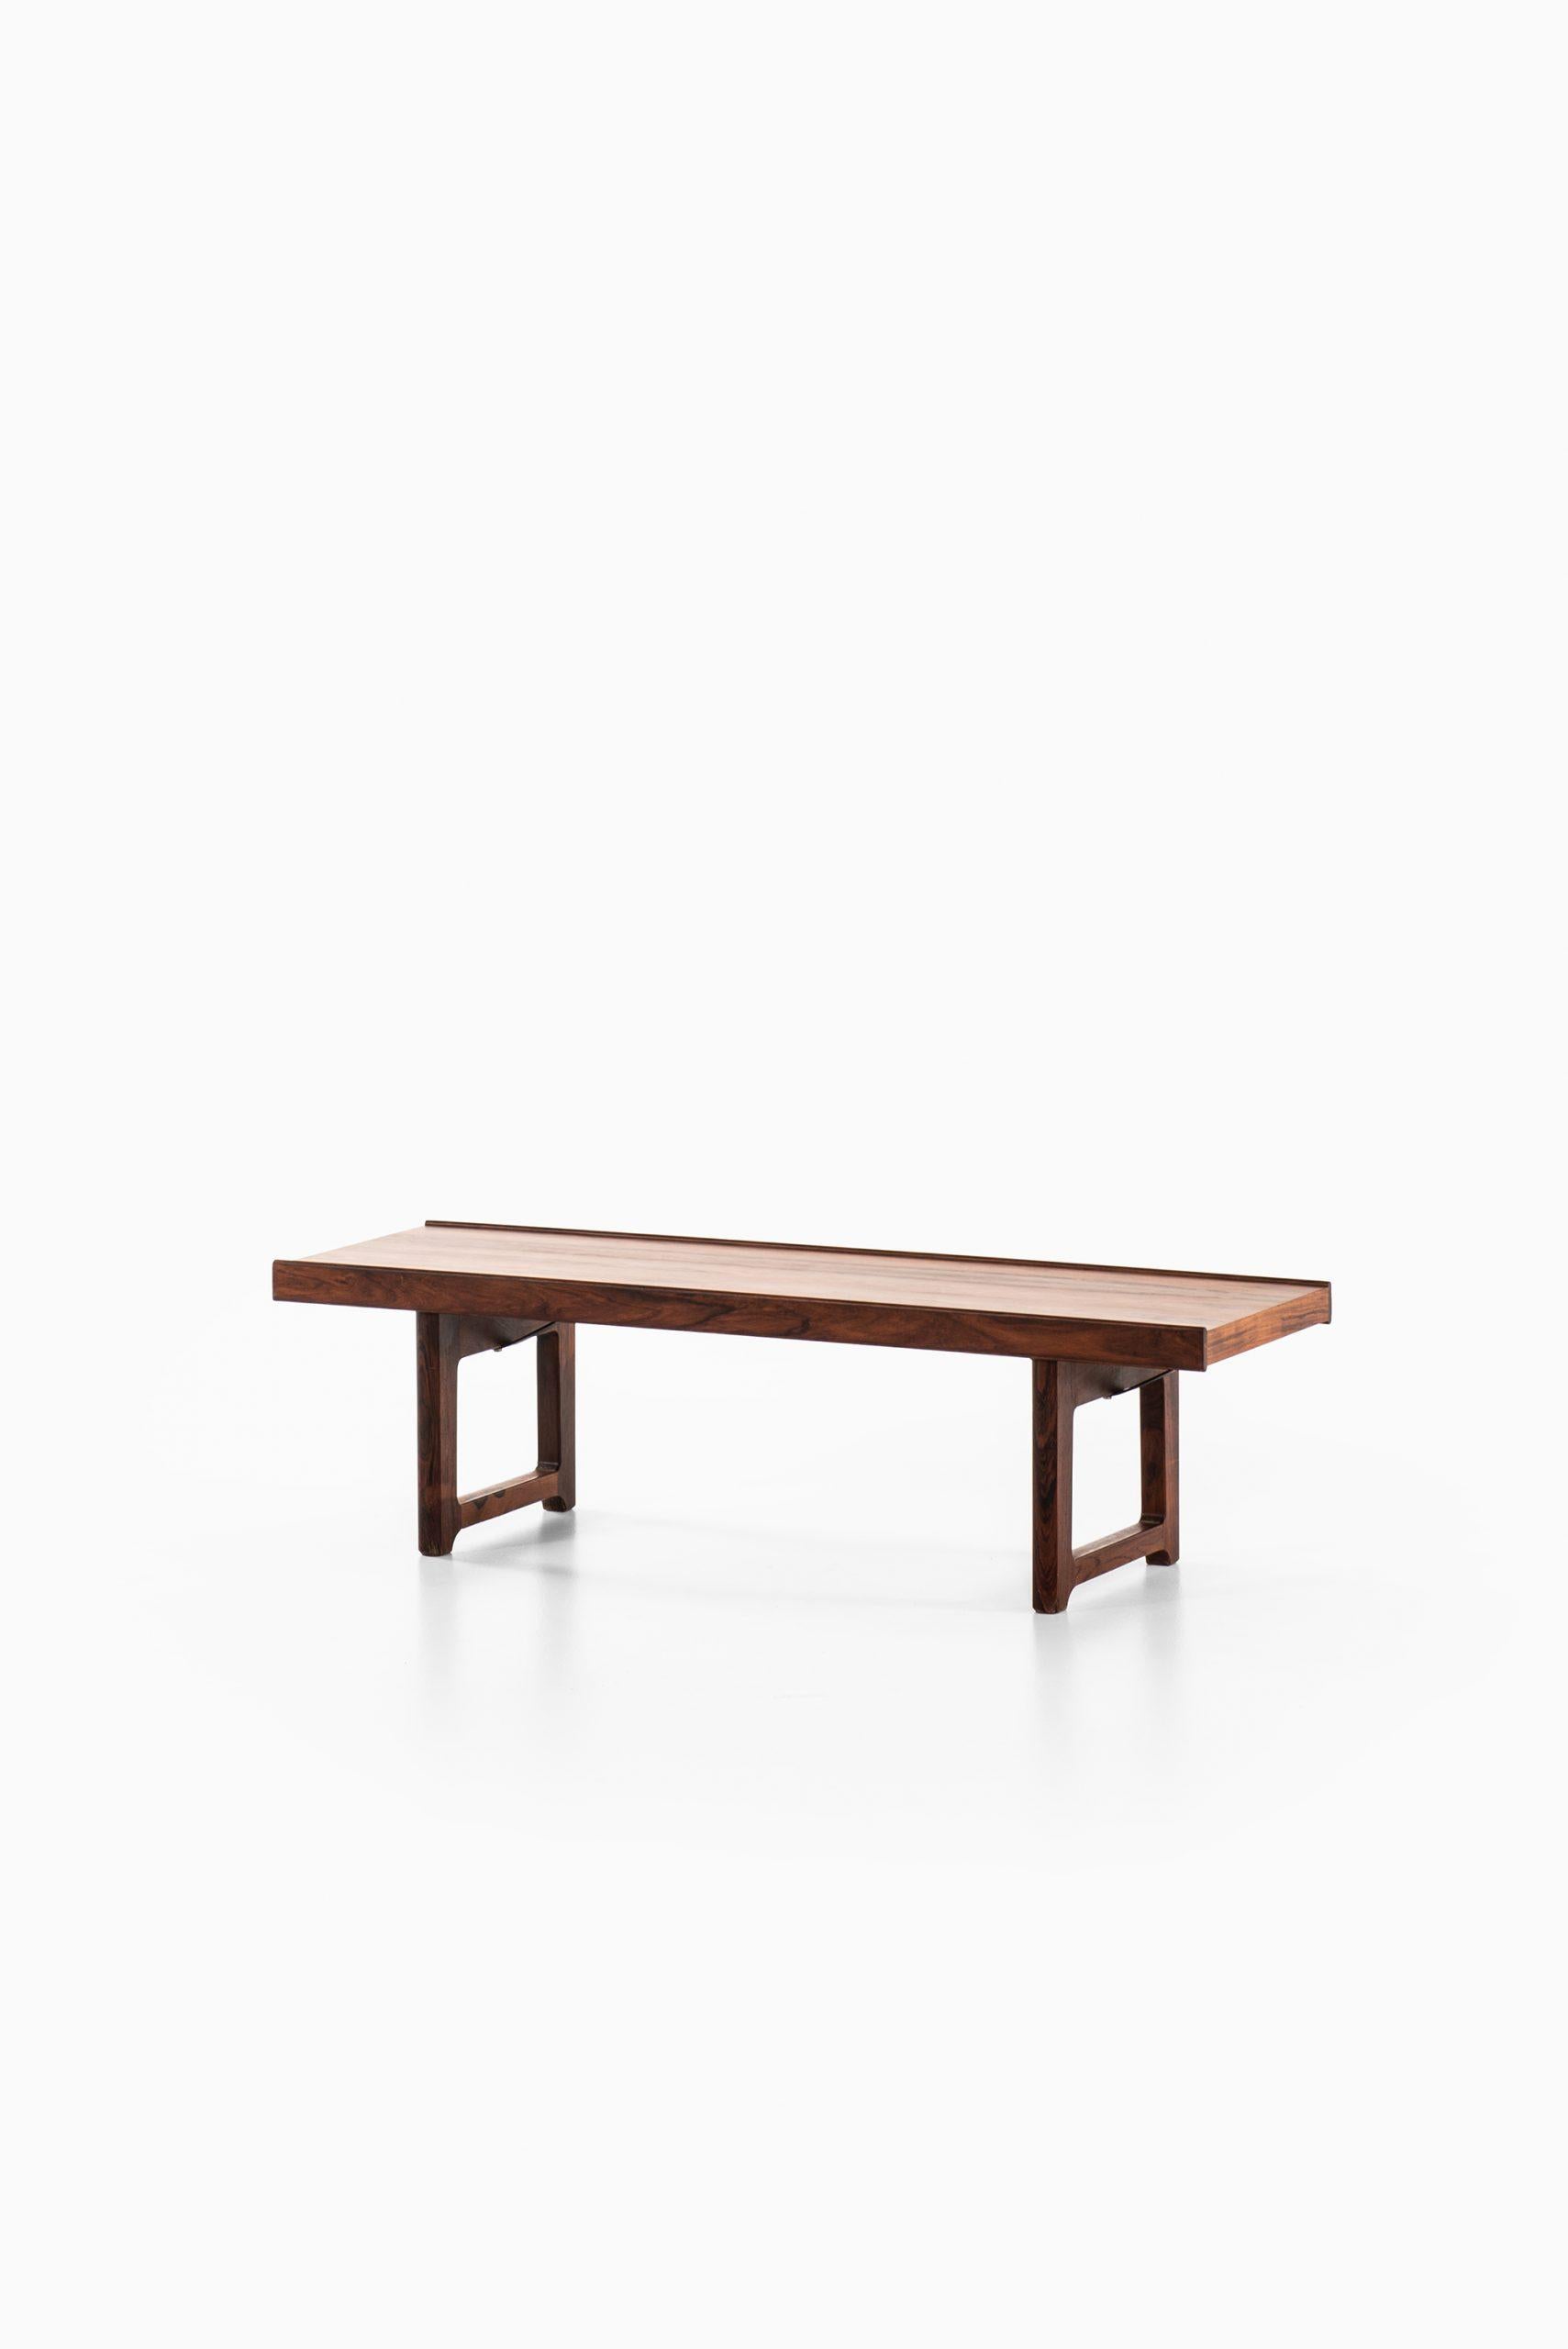 Bench / side table model Krobo designed by Torbjørn Afdal. Produced by Bruksbo in Norway.